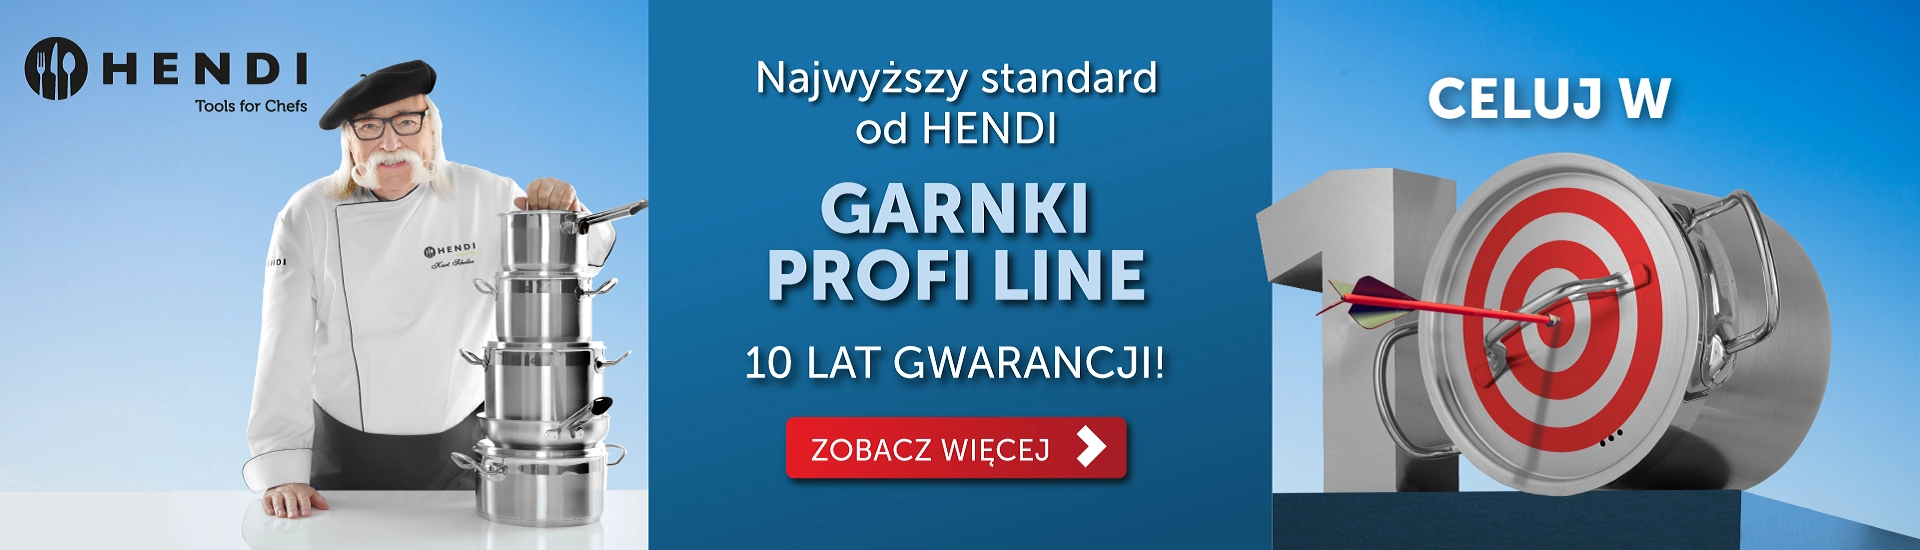 Garnki Profi Line